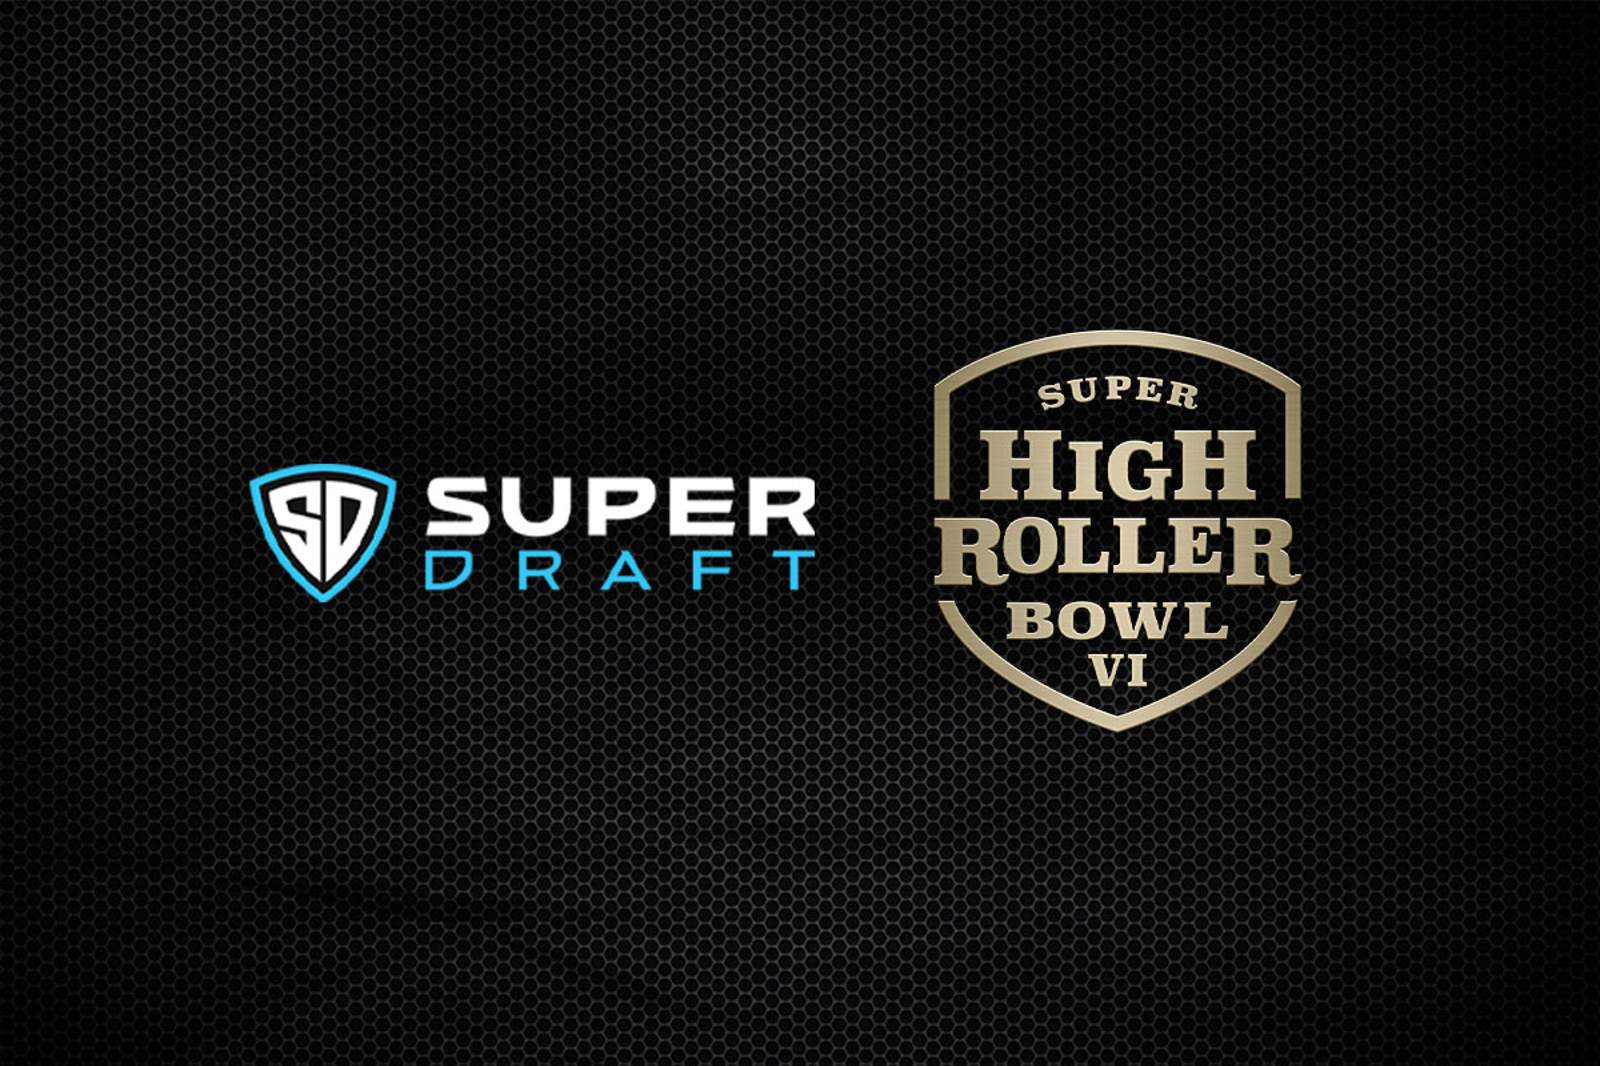 Draft Your Super High Roller Bowl VI SuperDraft Team Today!